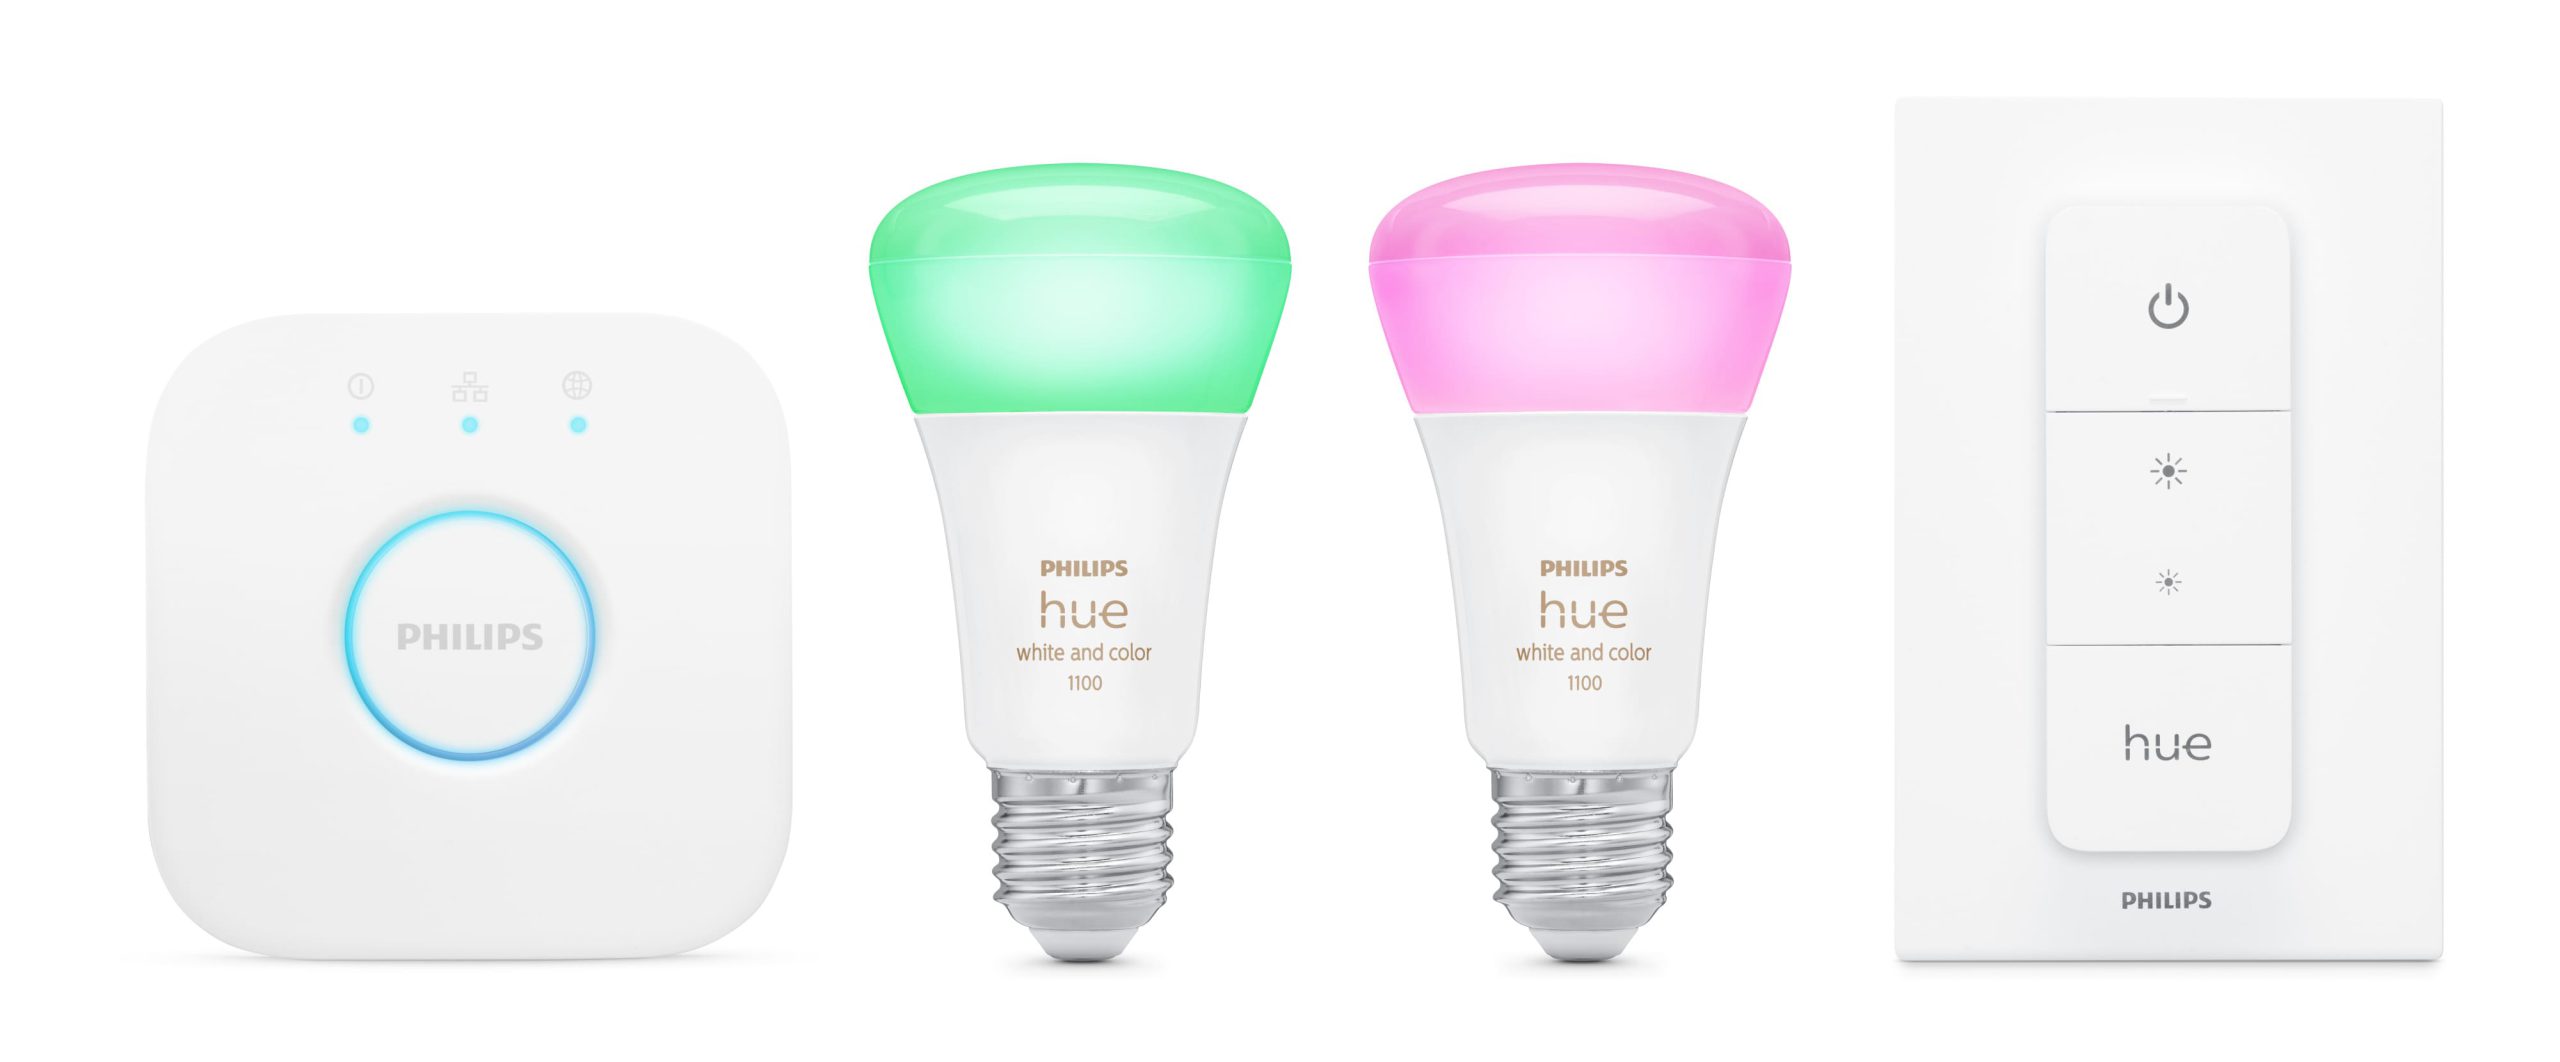 Philips Hue Bulbs and Lighting System